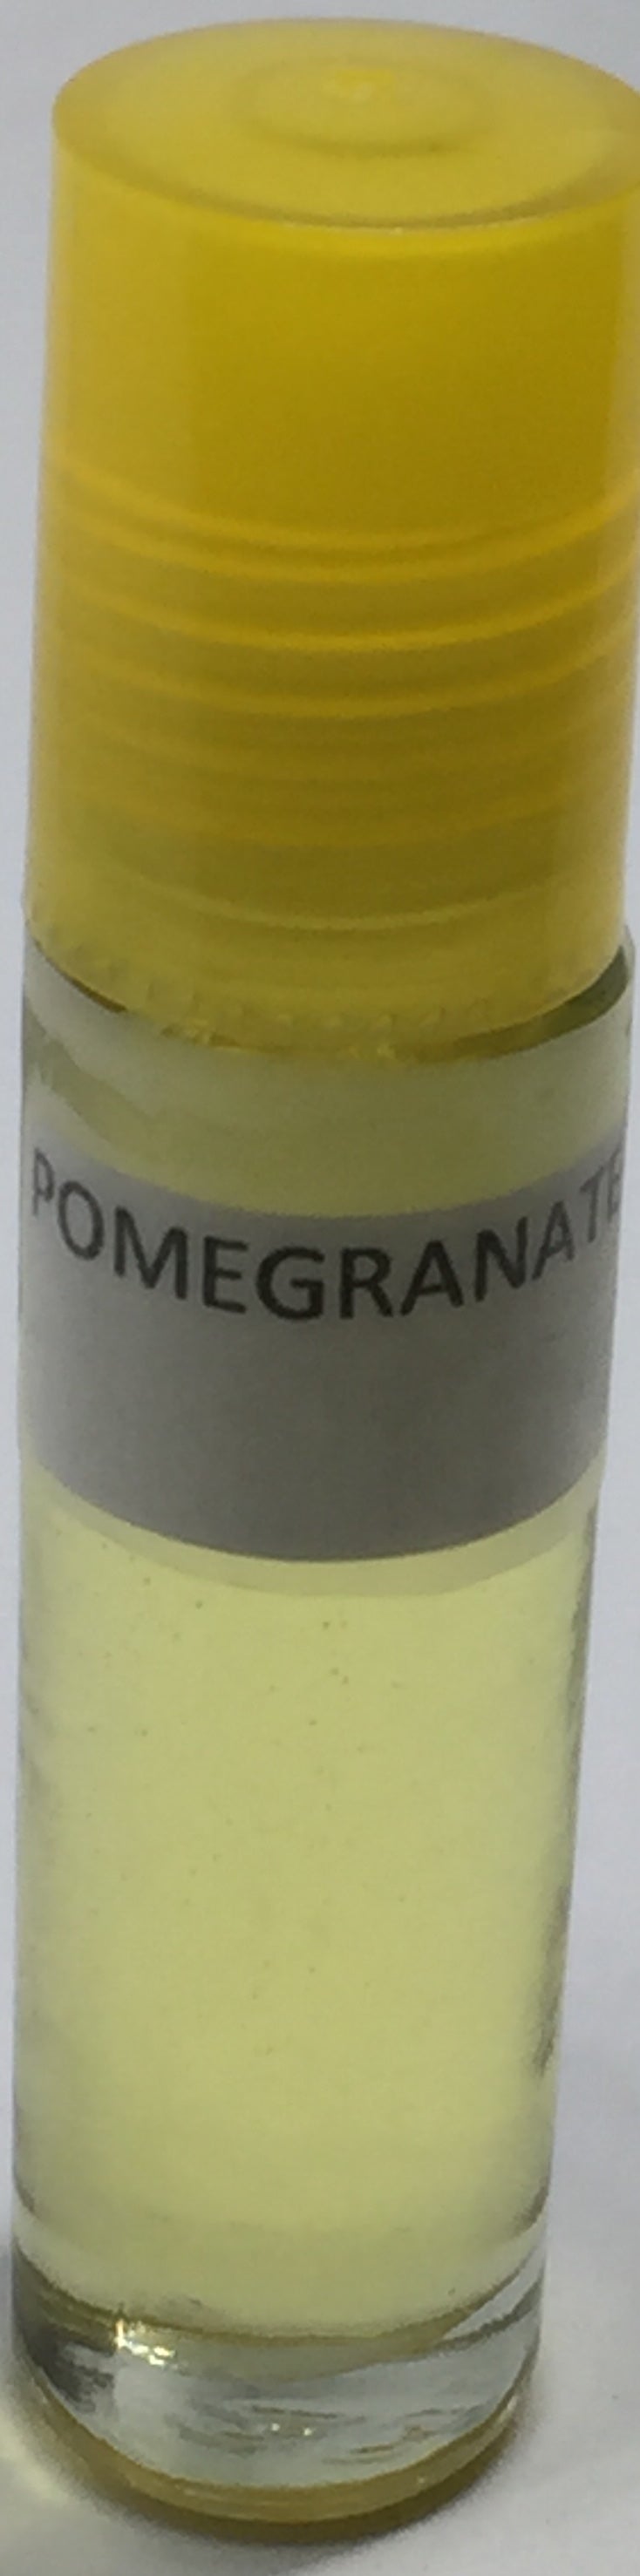 Pomegranate Twist: Fragrance(Perfume)Body Oil